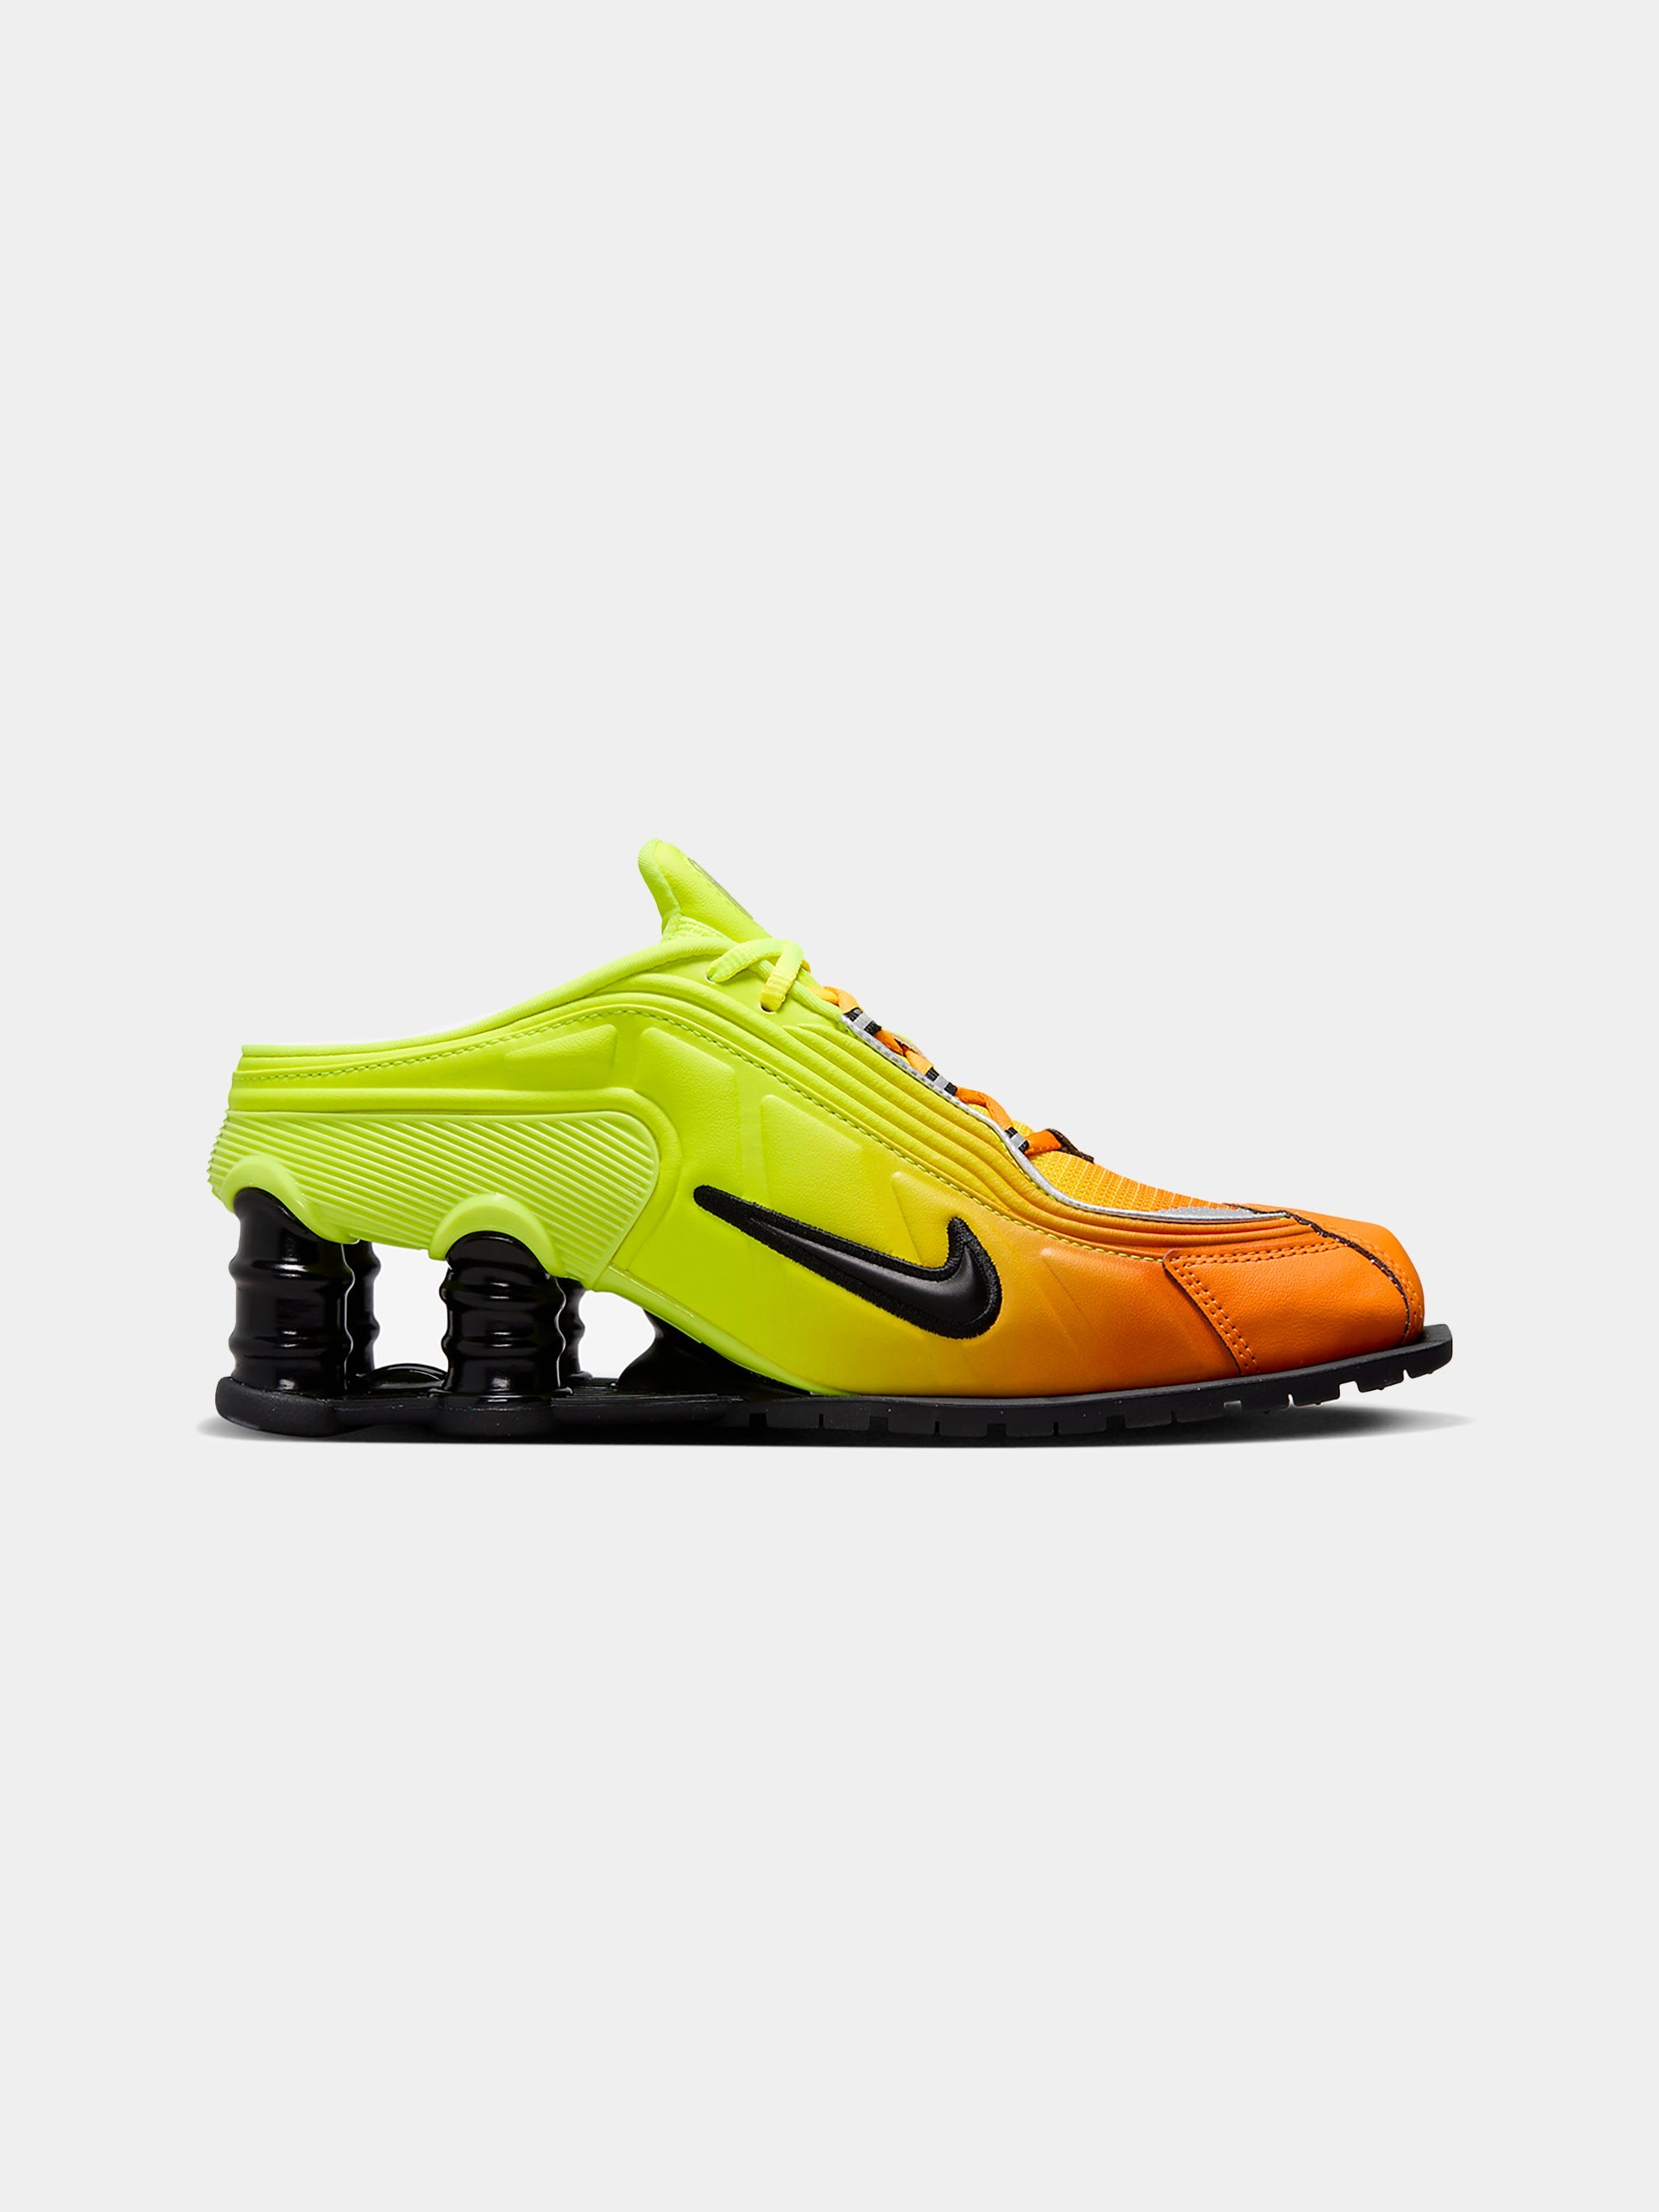 W Nike x Martine Rose Shox MR4 (Safety Orange/Metallic Silver)